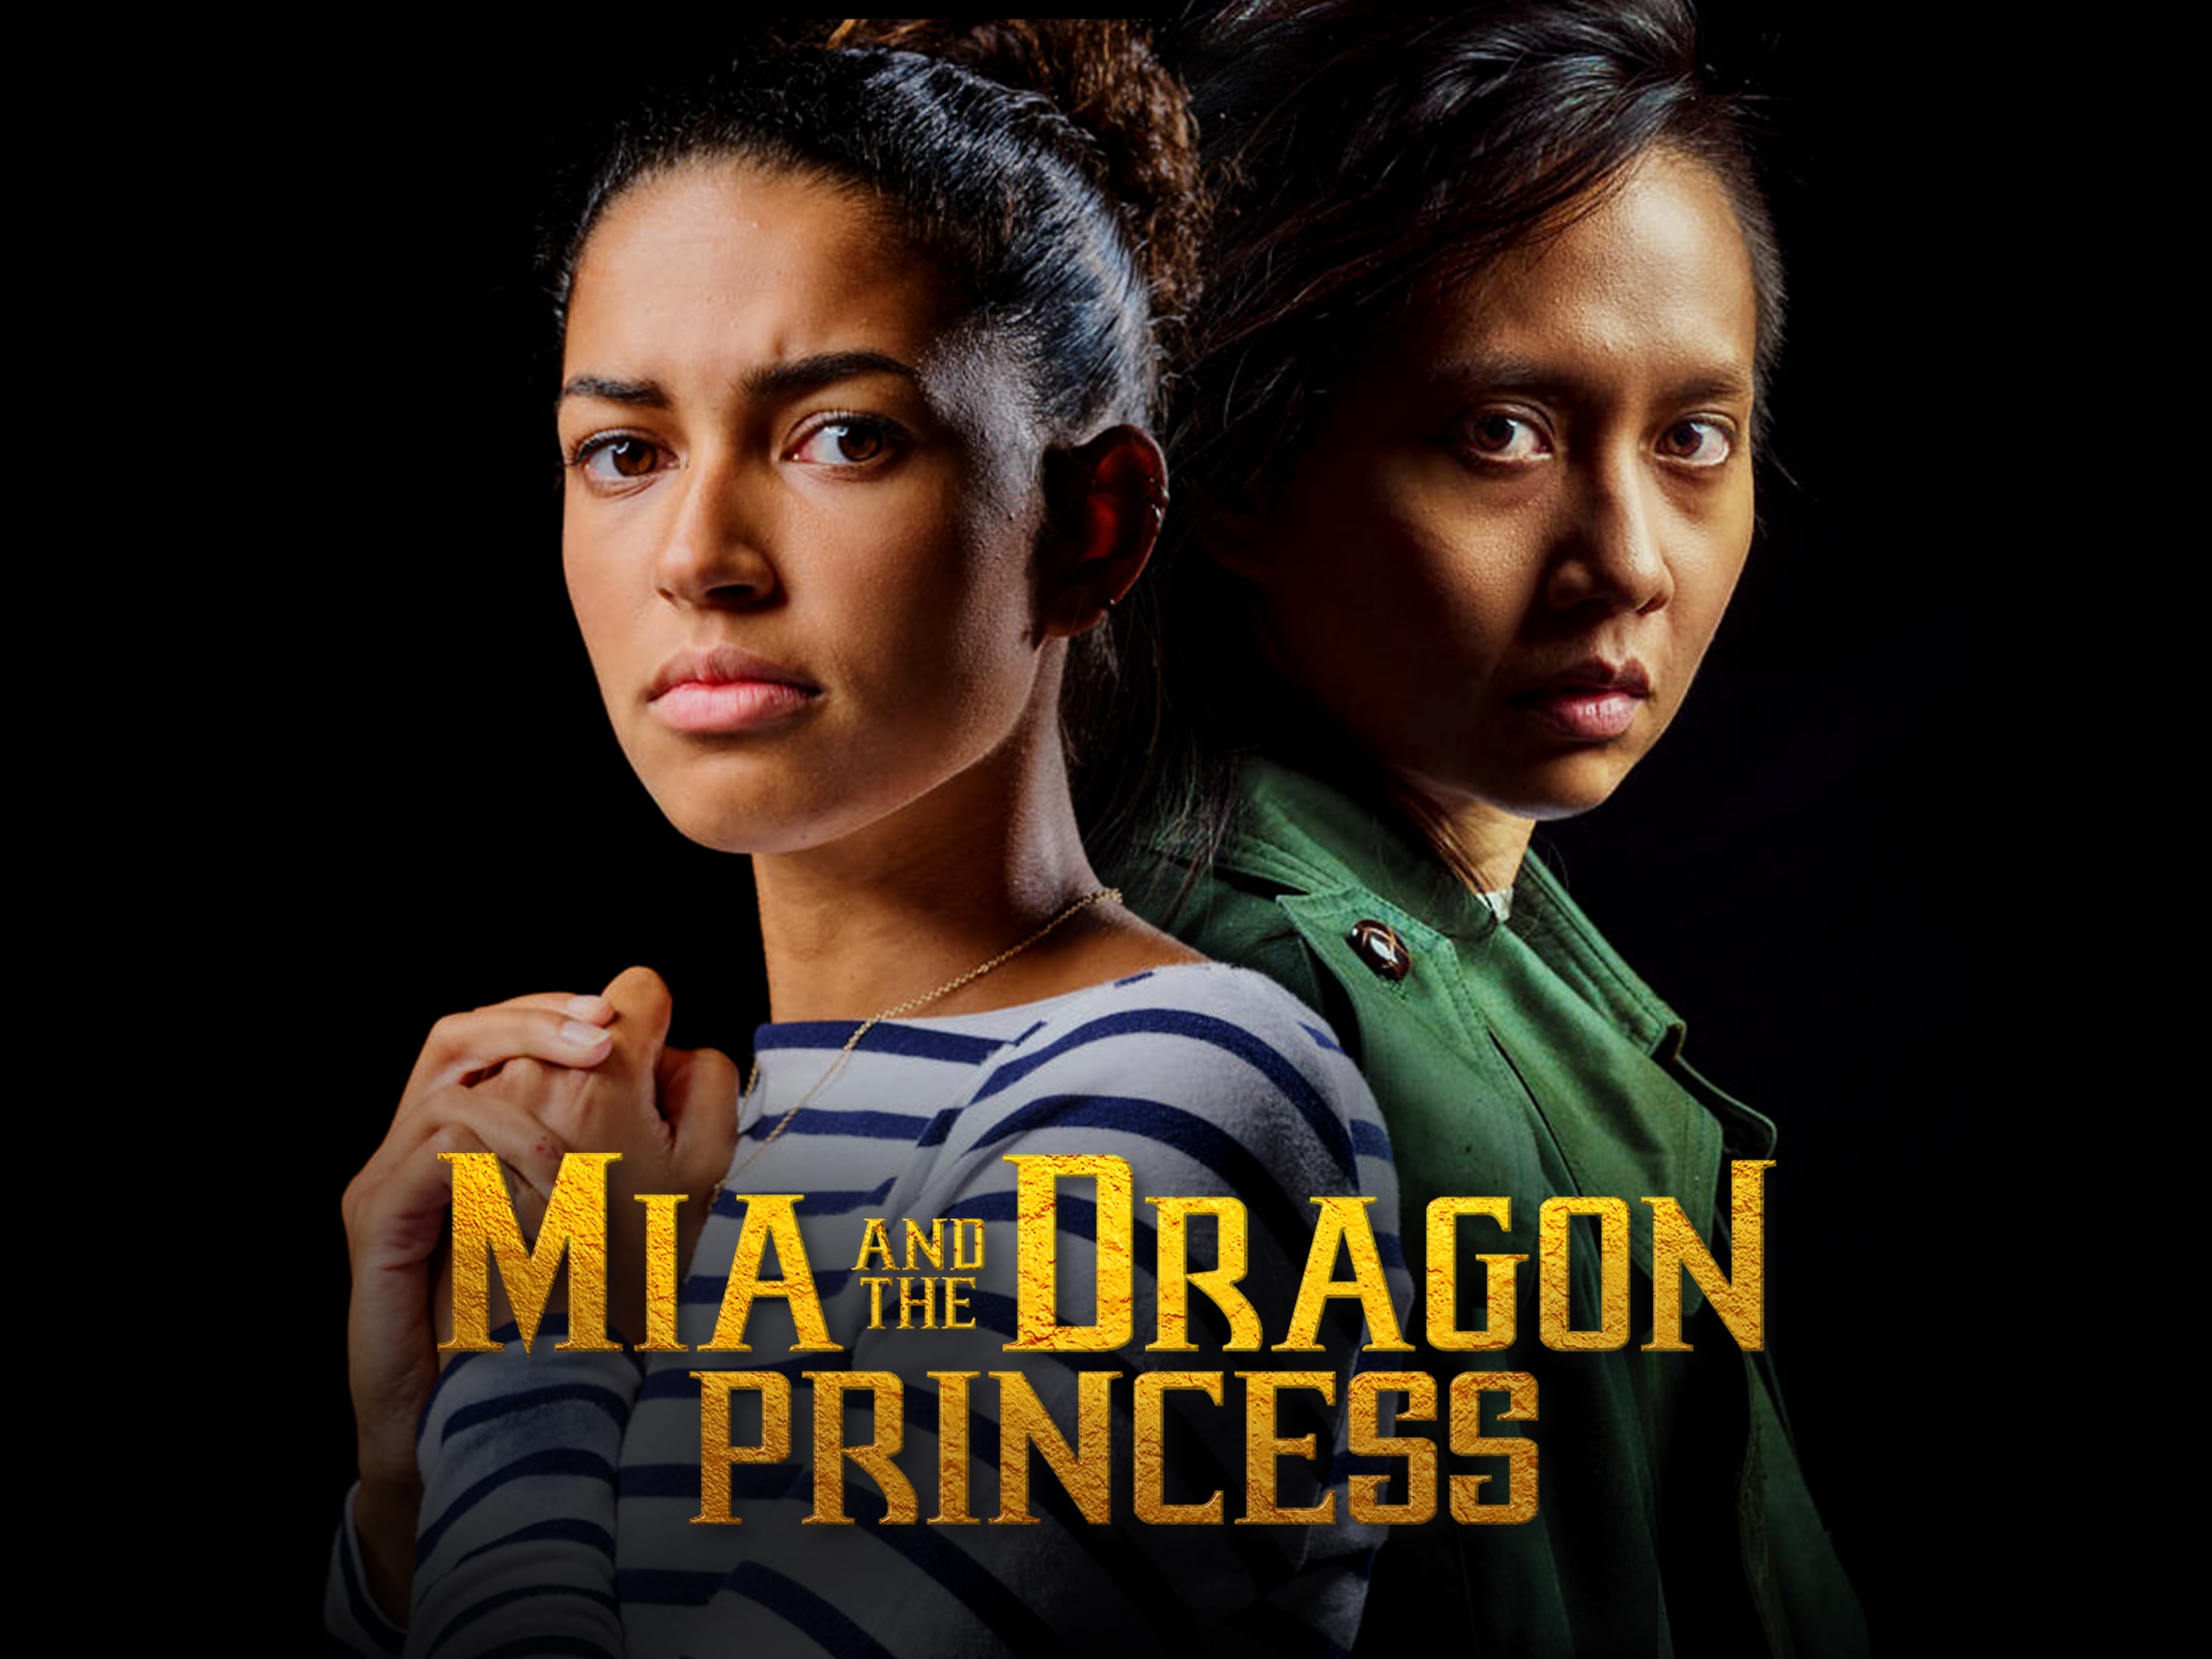 jaquette du jeu vidéo Mia and the Dragon Princess